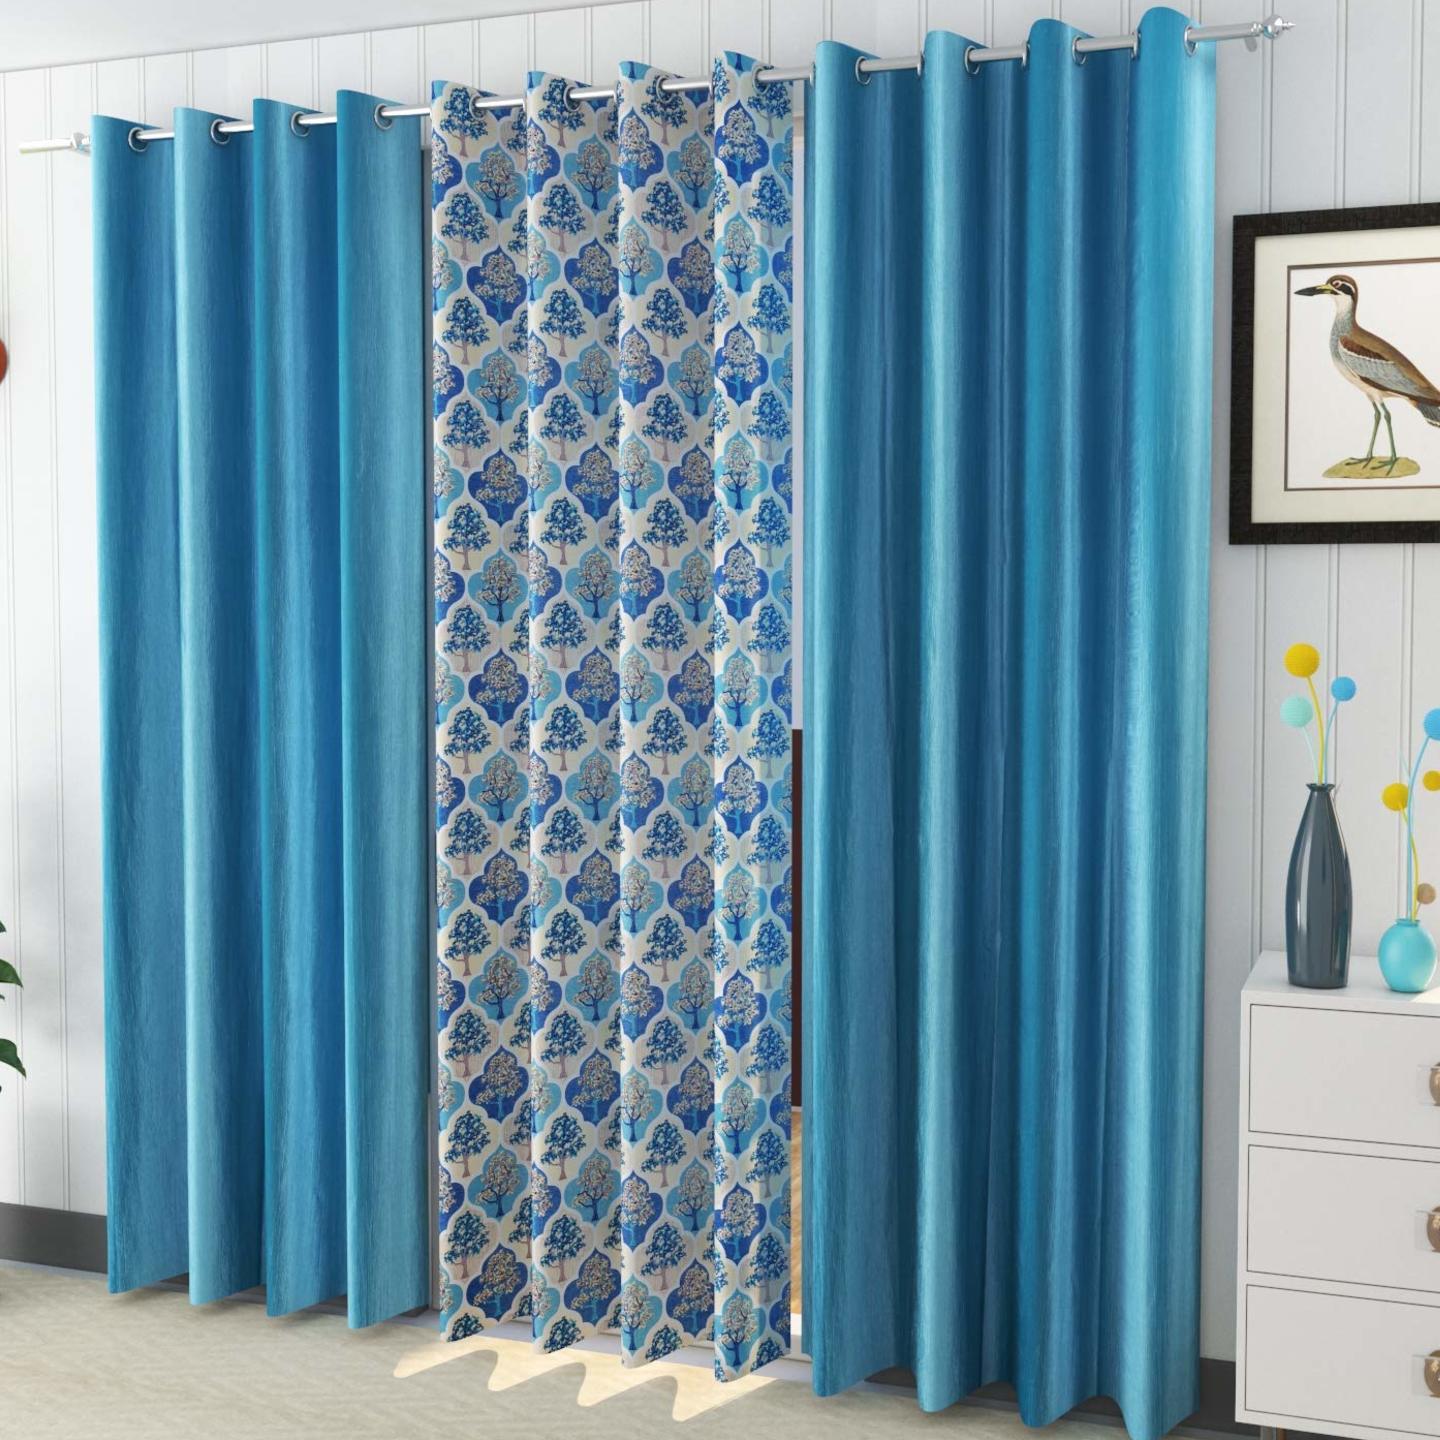 Handtex Home Curtains Polyester Tree Printed Set of 3 Pcs Aqua (1Tree+2Plain) Size for Long Door 4 Feet x 9 Feet